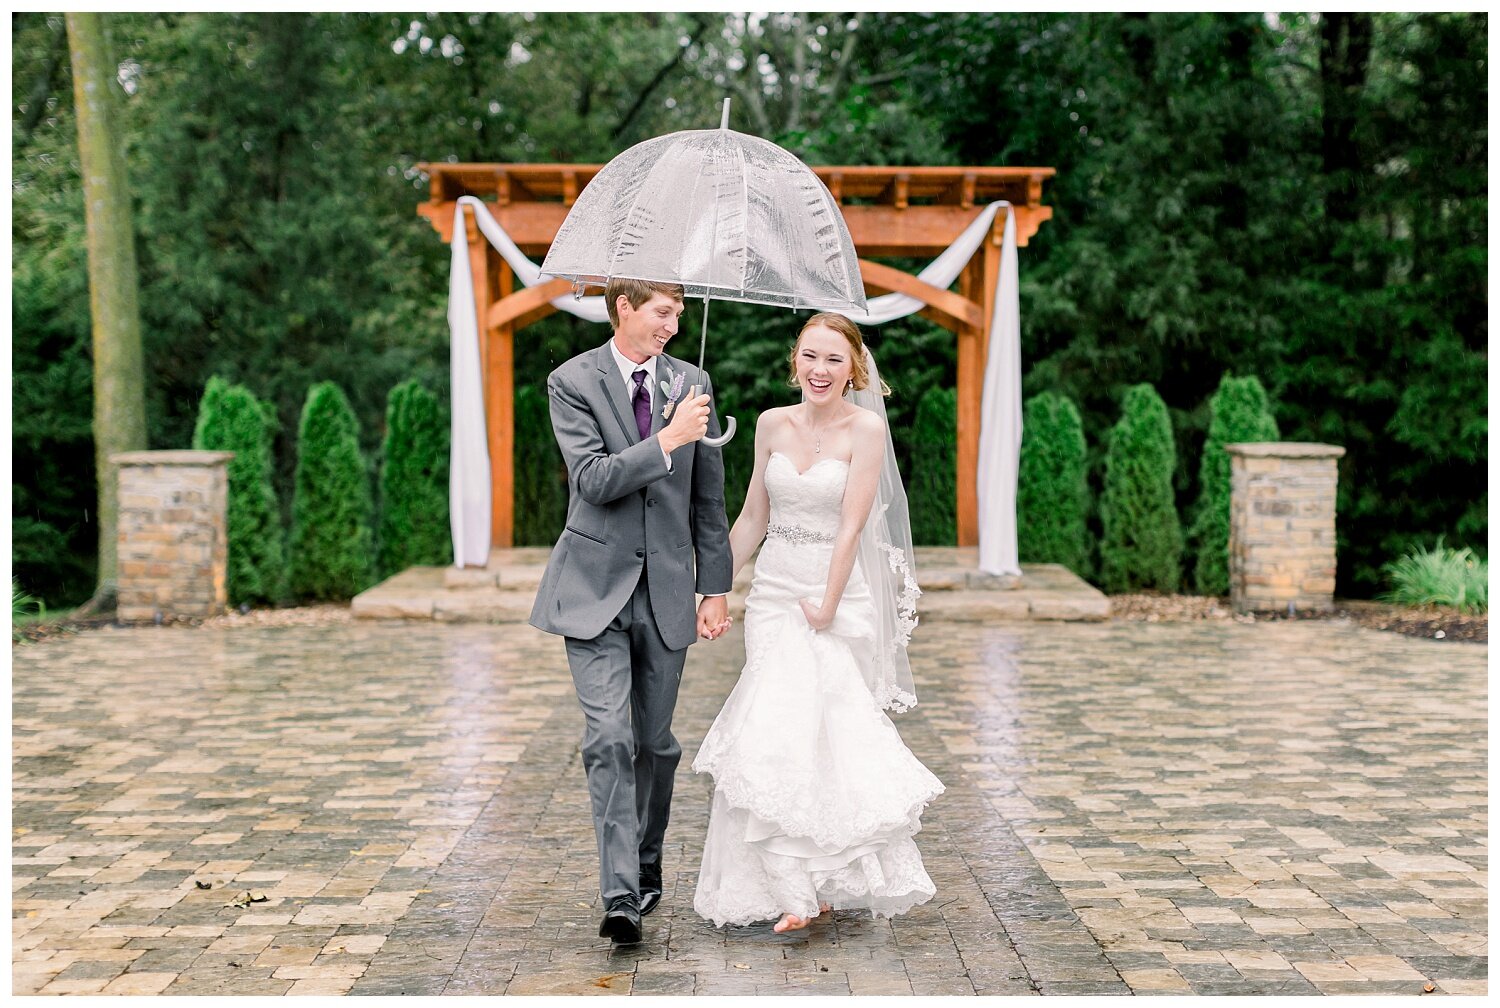 Rainy wedding at Timber Creek Events